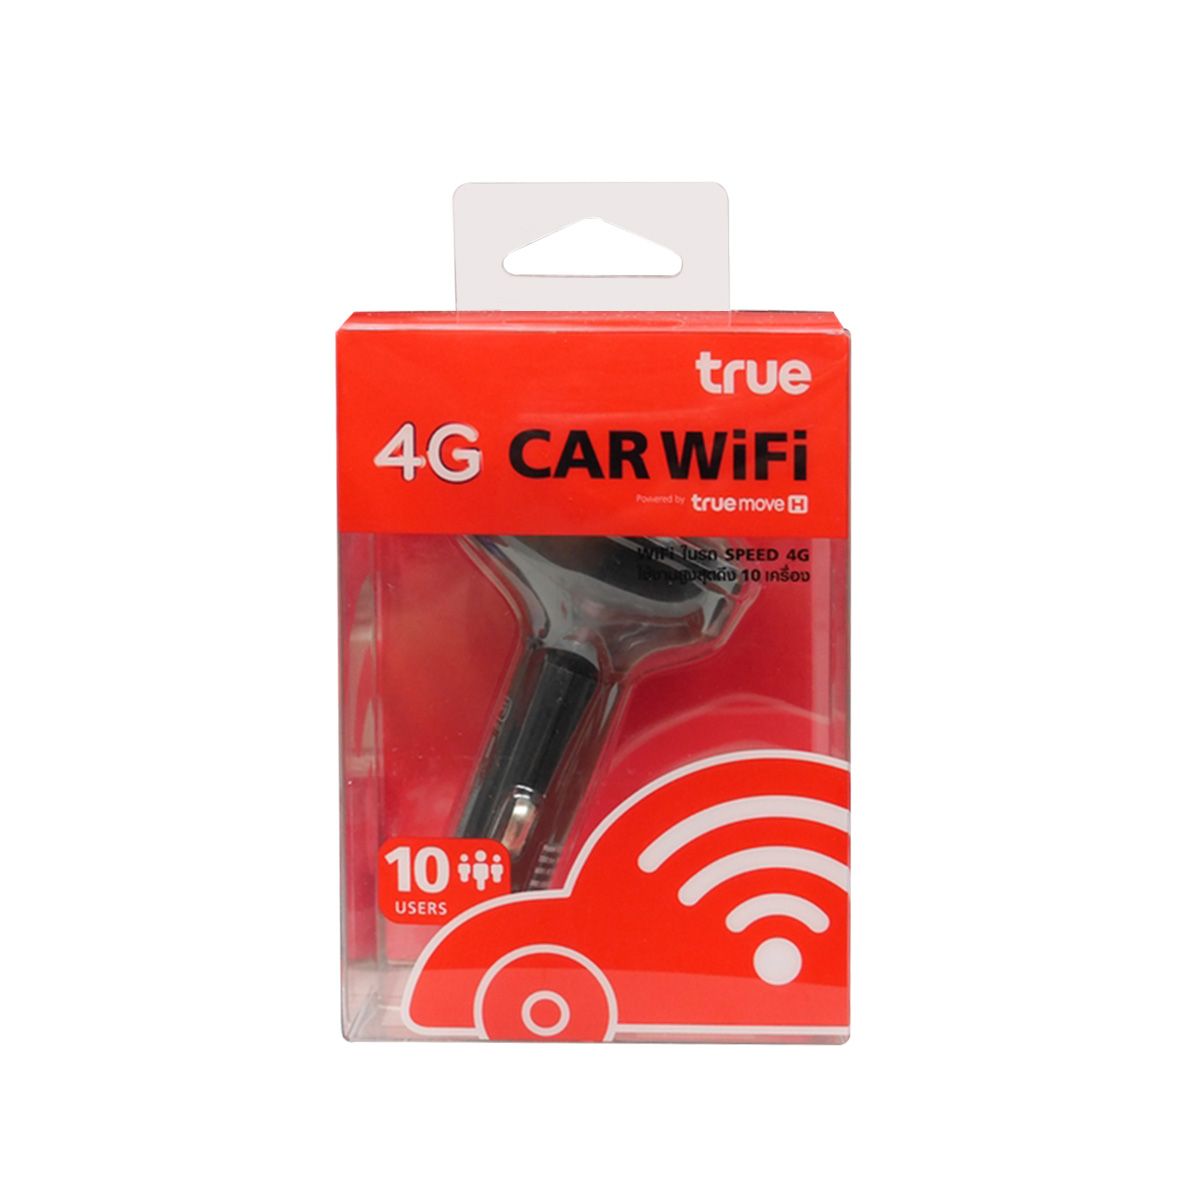 True 4G Car WiFi (10 User) สำหรับรถยนต์